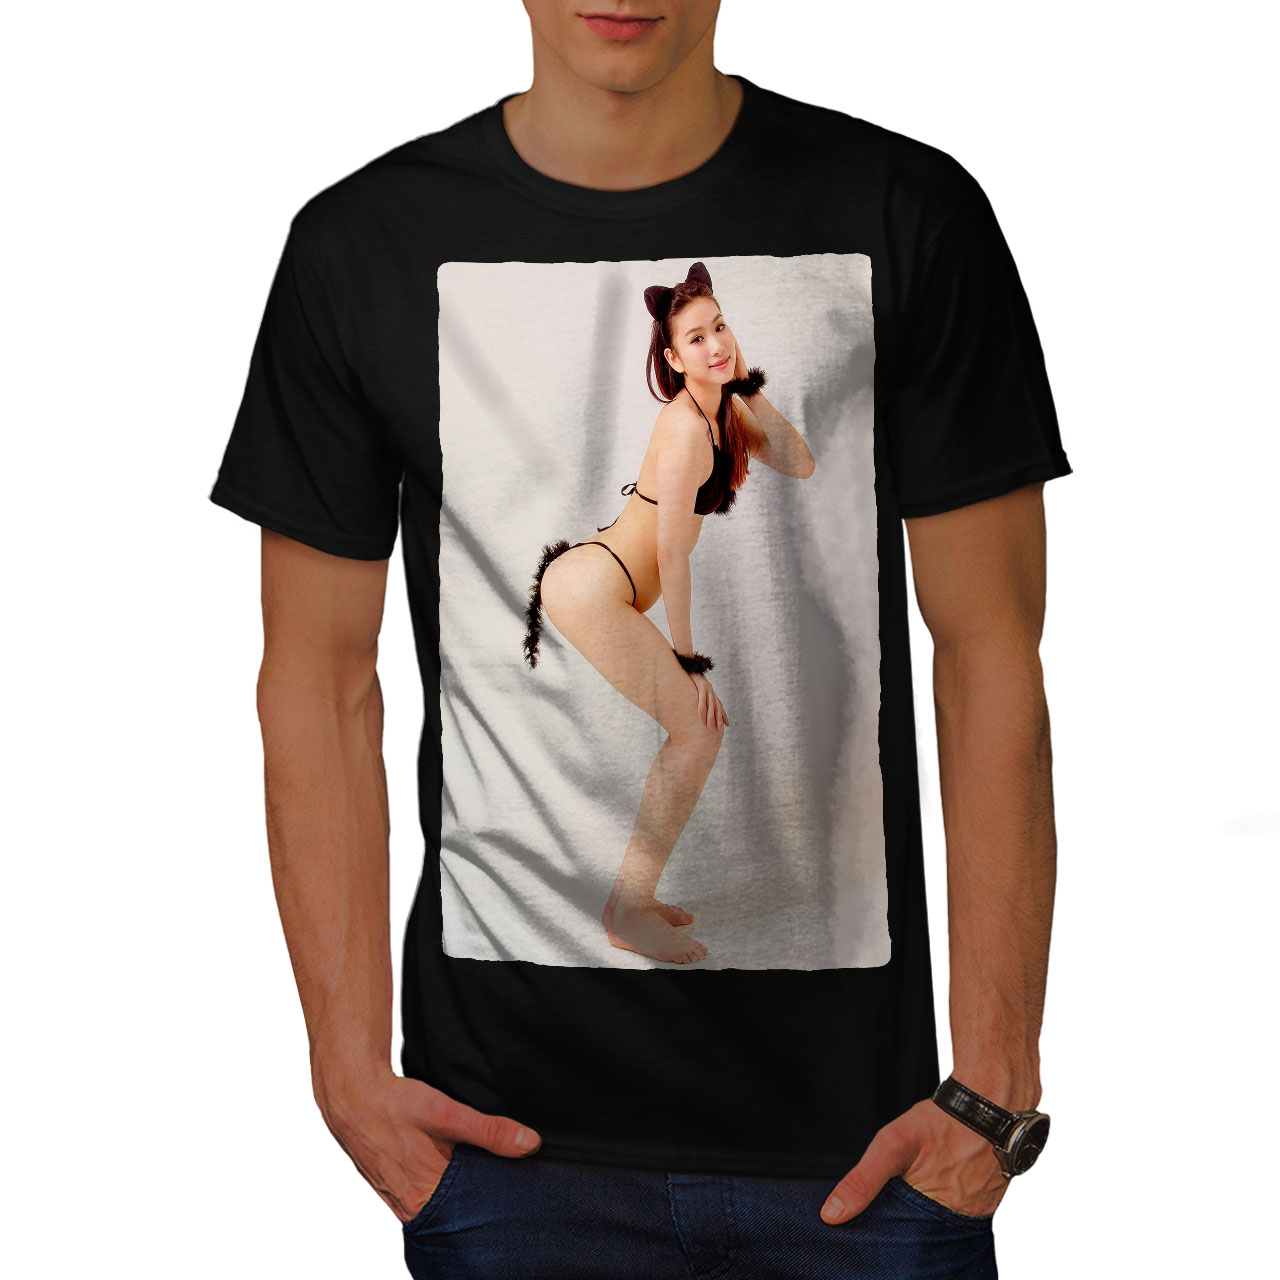 Wellcoda Cosplay Hot Girl Sexy T Shirt Homme Femme De Design Graphique Imprimé Tee Ebay